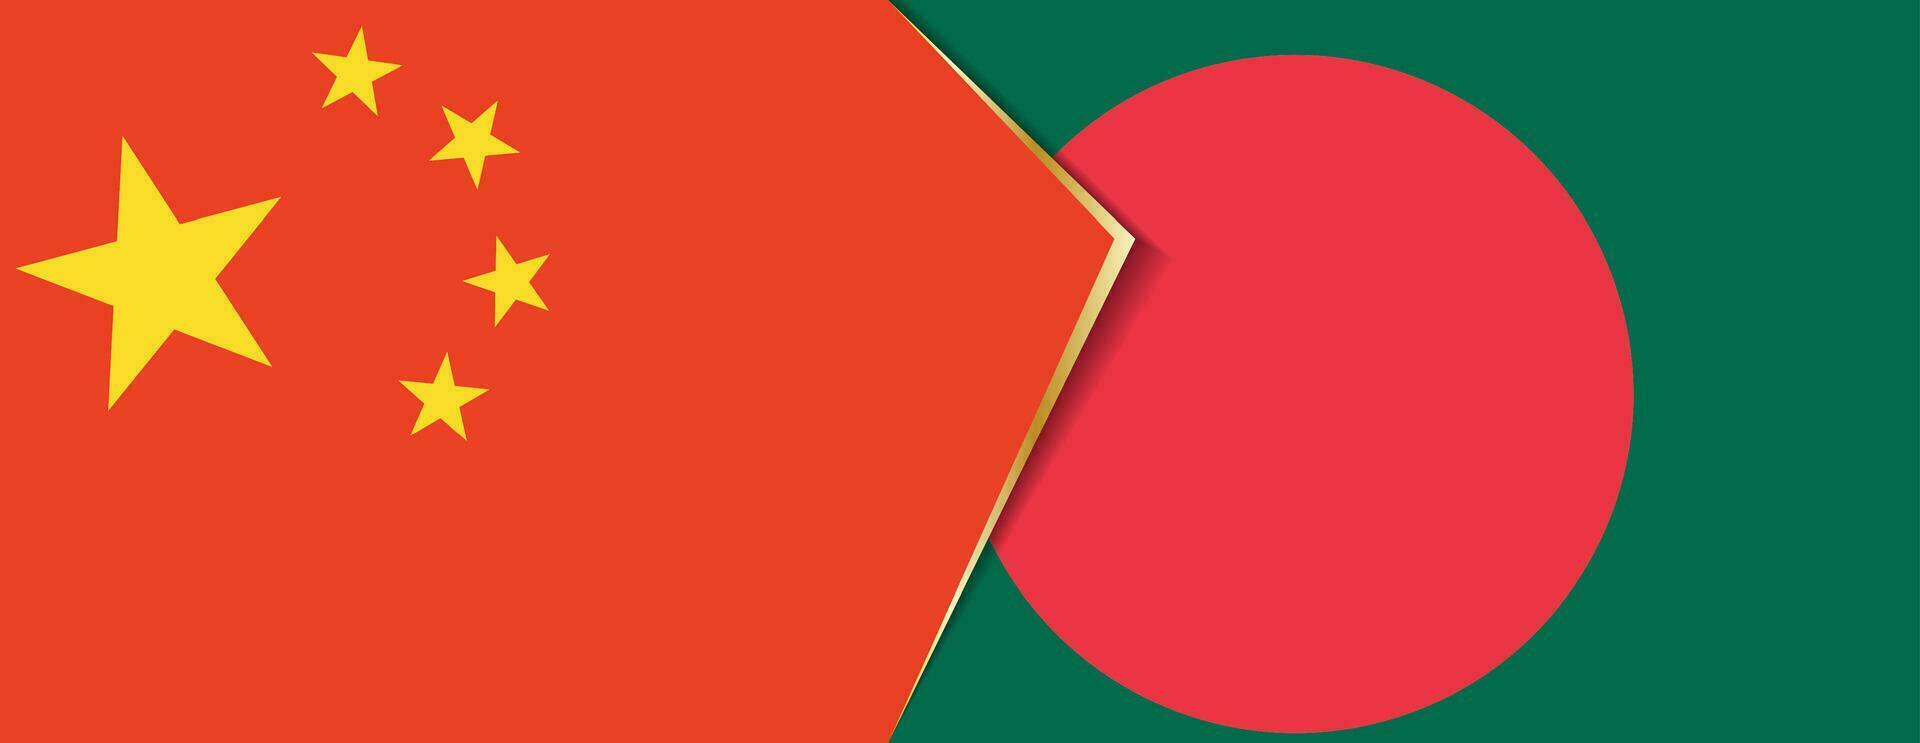 China and Bangladesh flags, two vector flags.